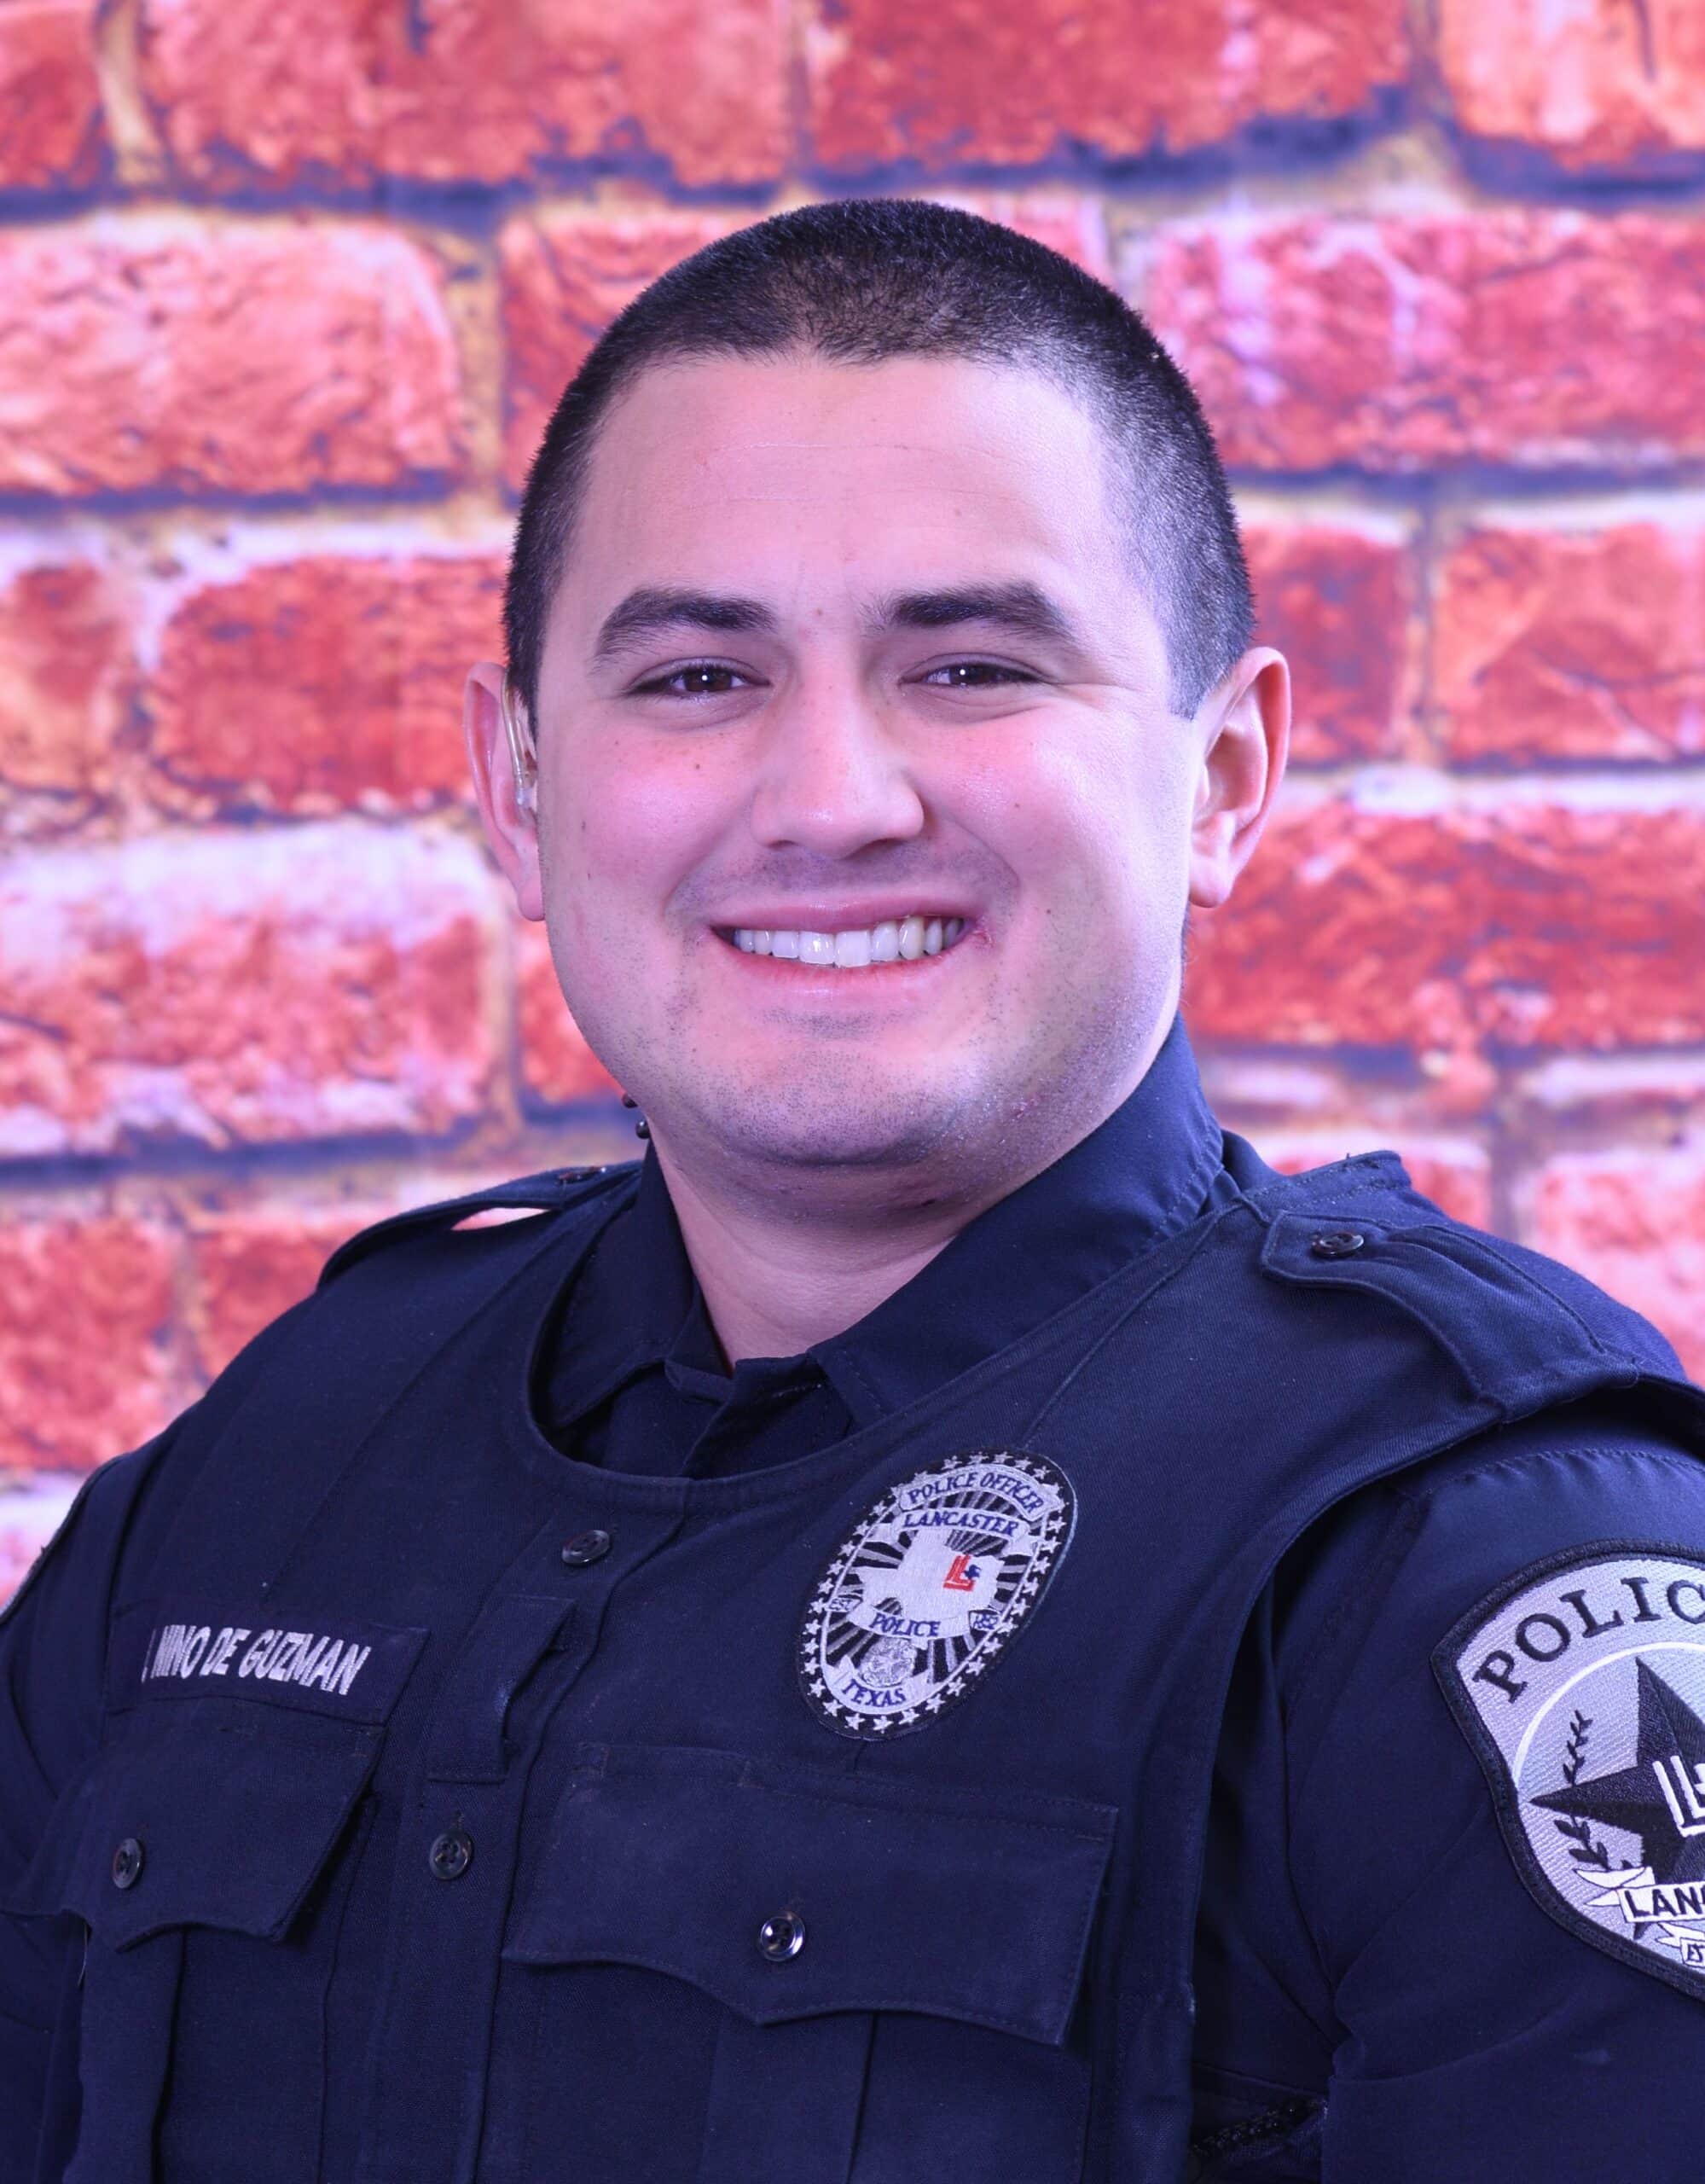 Police Officer Guzman